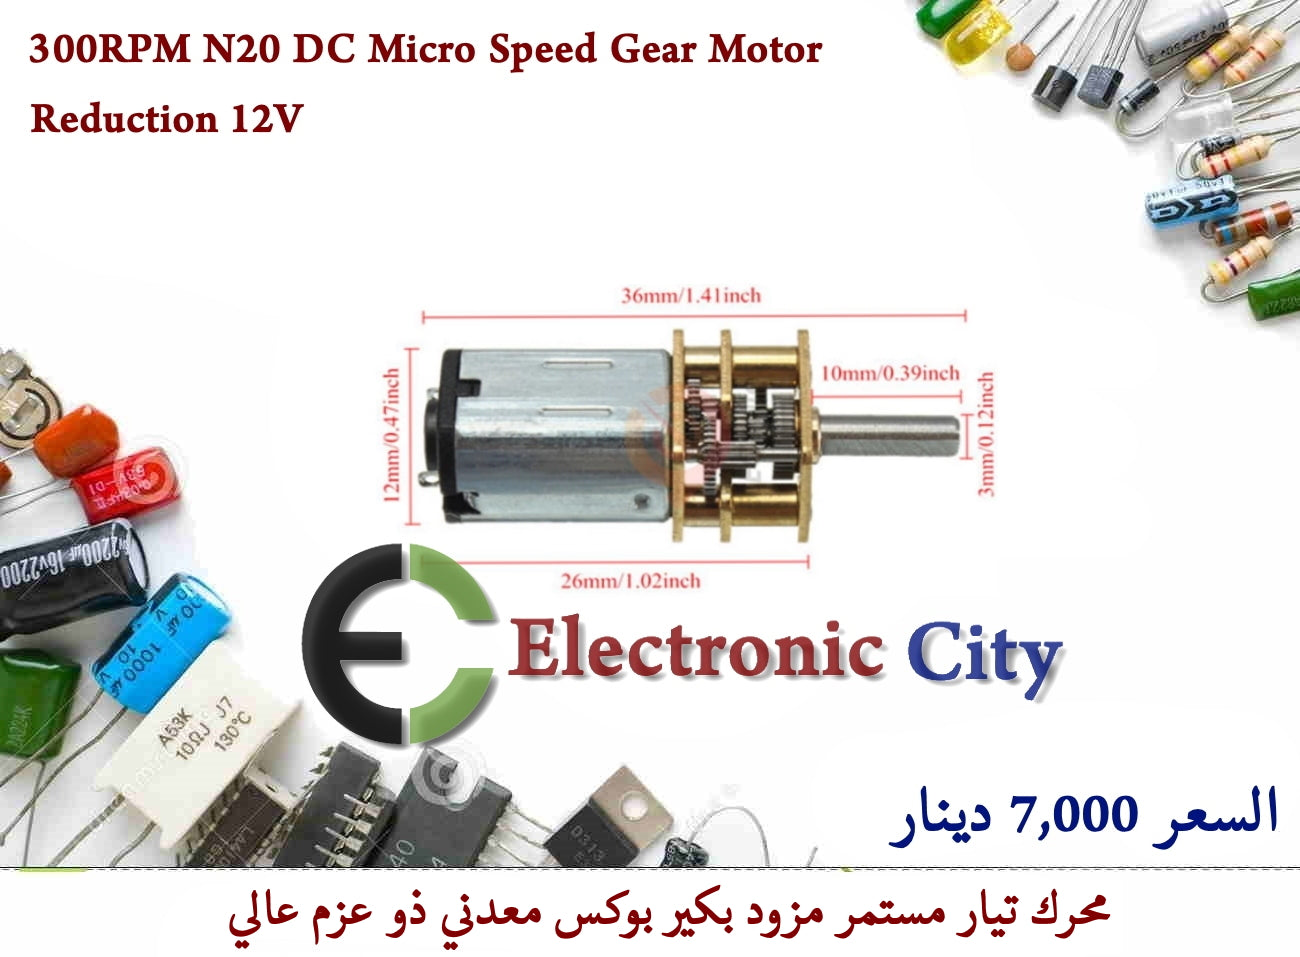 300RPM N20 DC Micro Speed Gear Motor Reduction 6V 12V #T2 011328